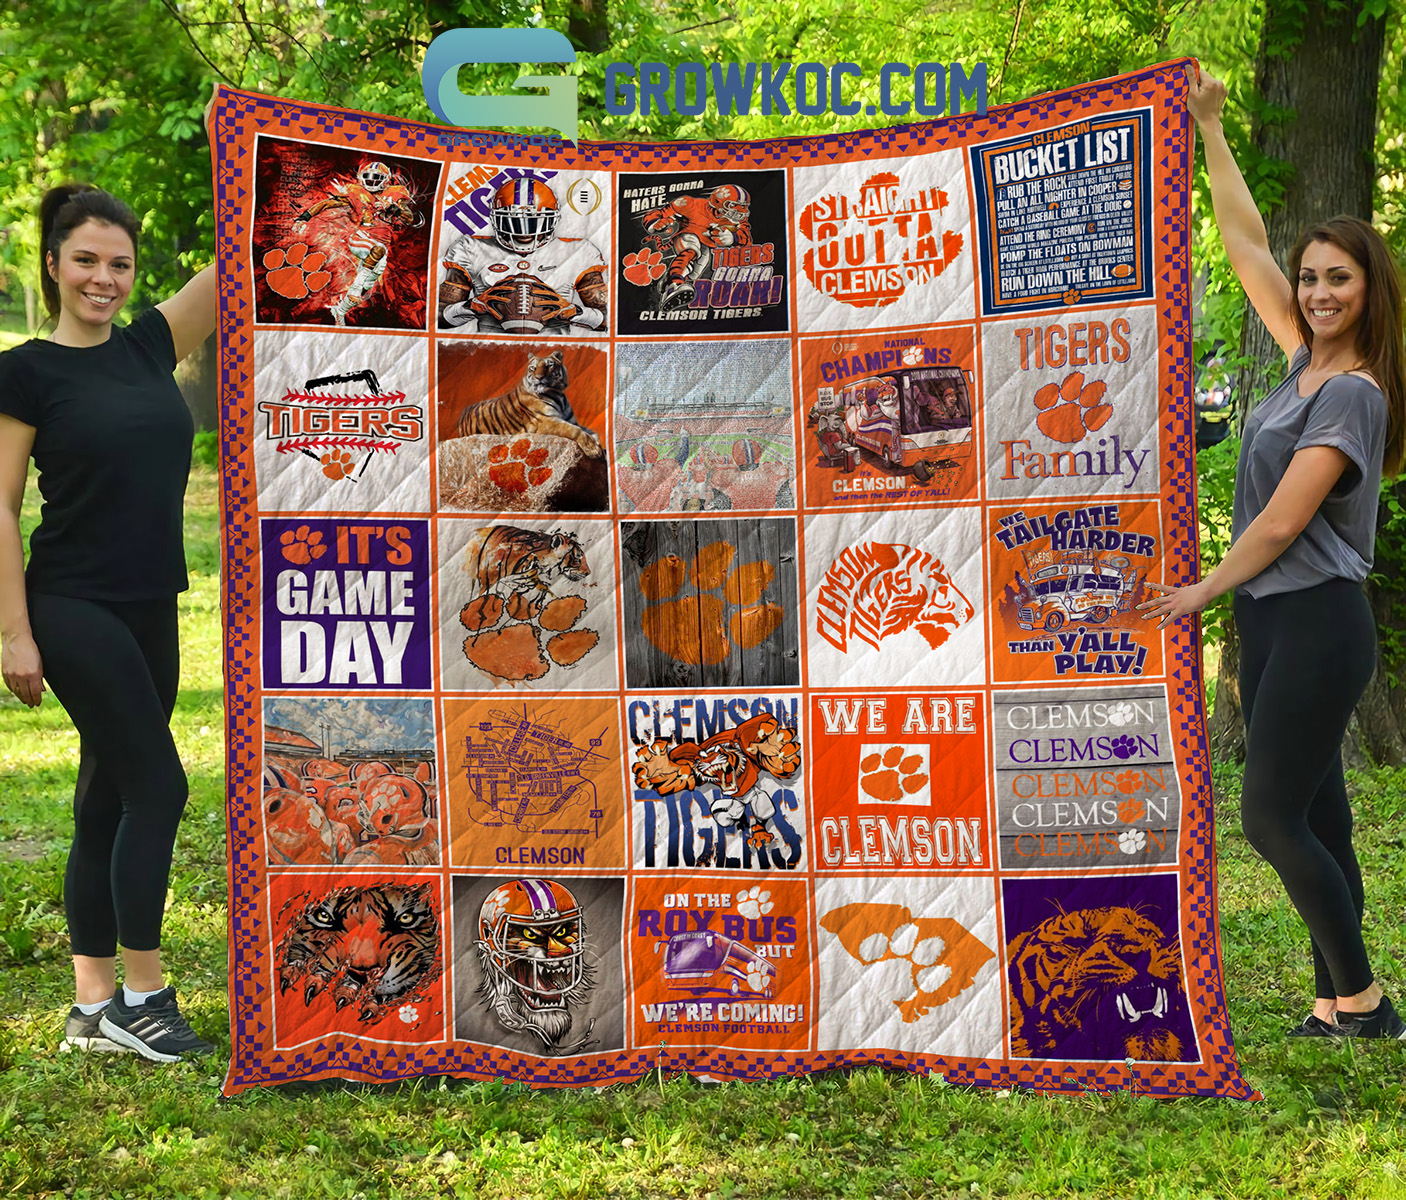 Clemson Tigers Poster Press Throw Pillow | College Logo Stuff